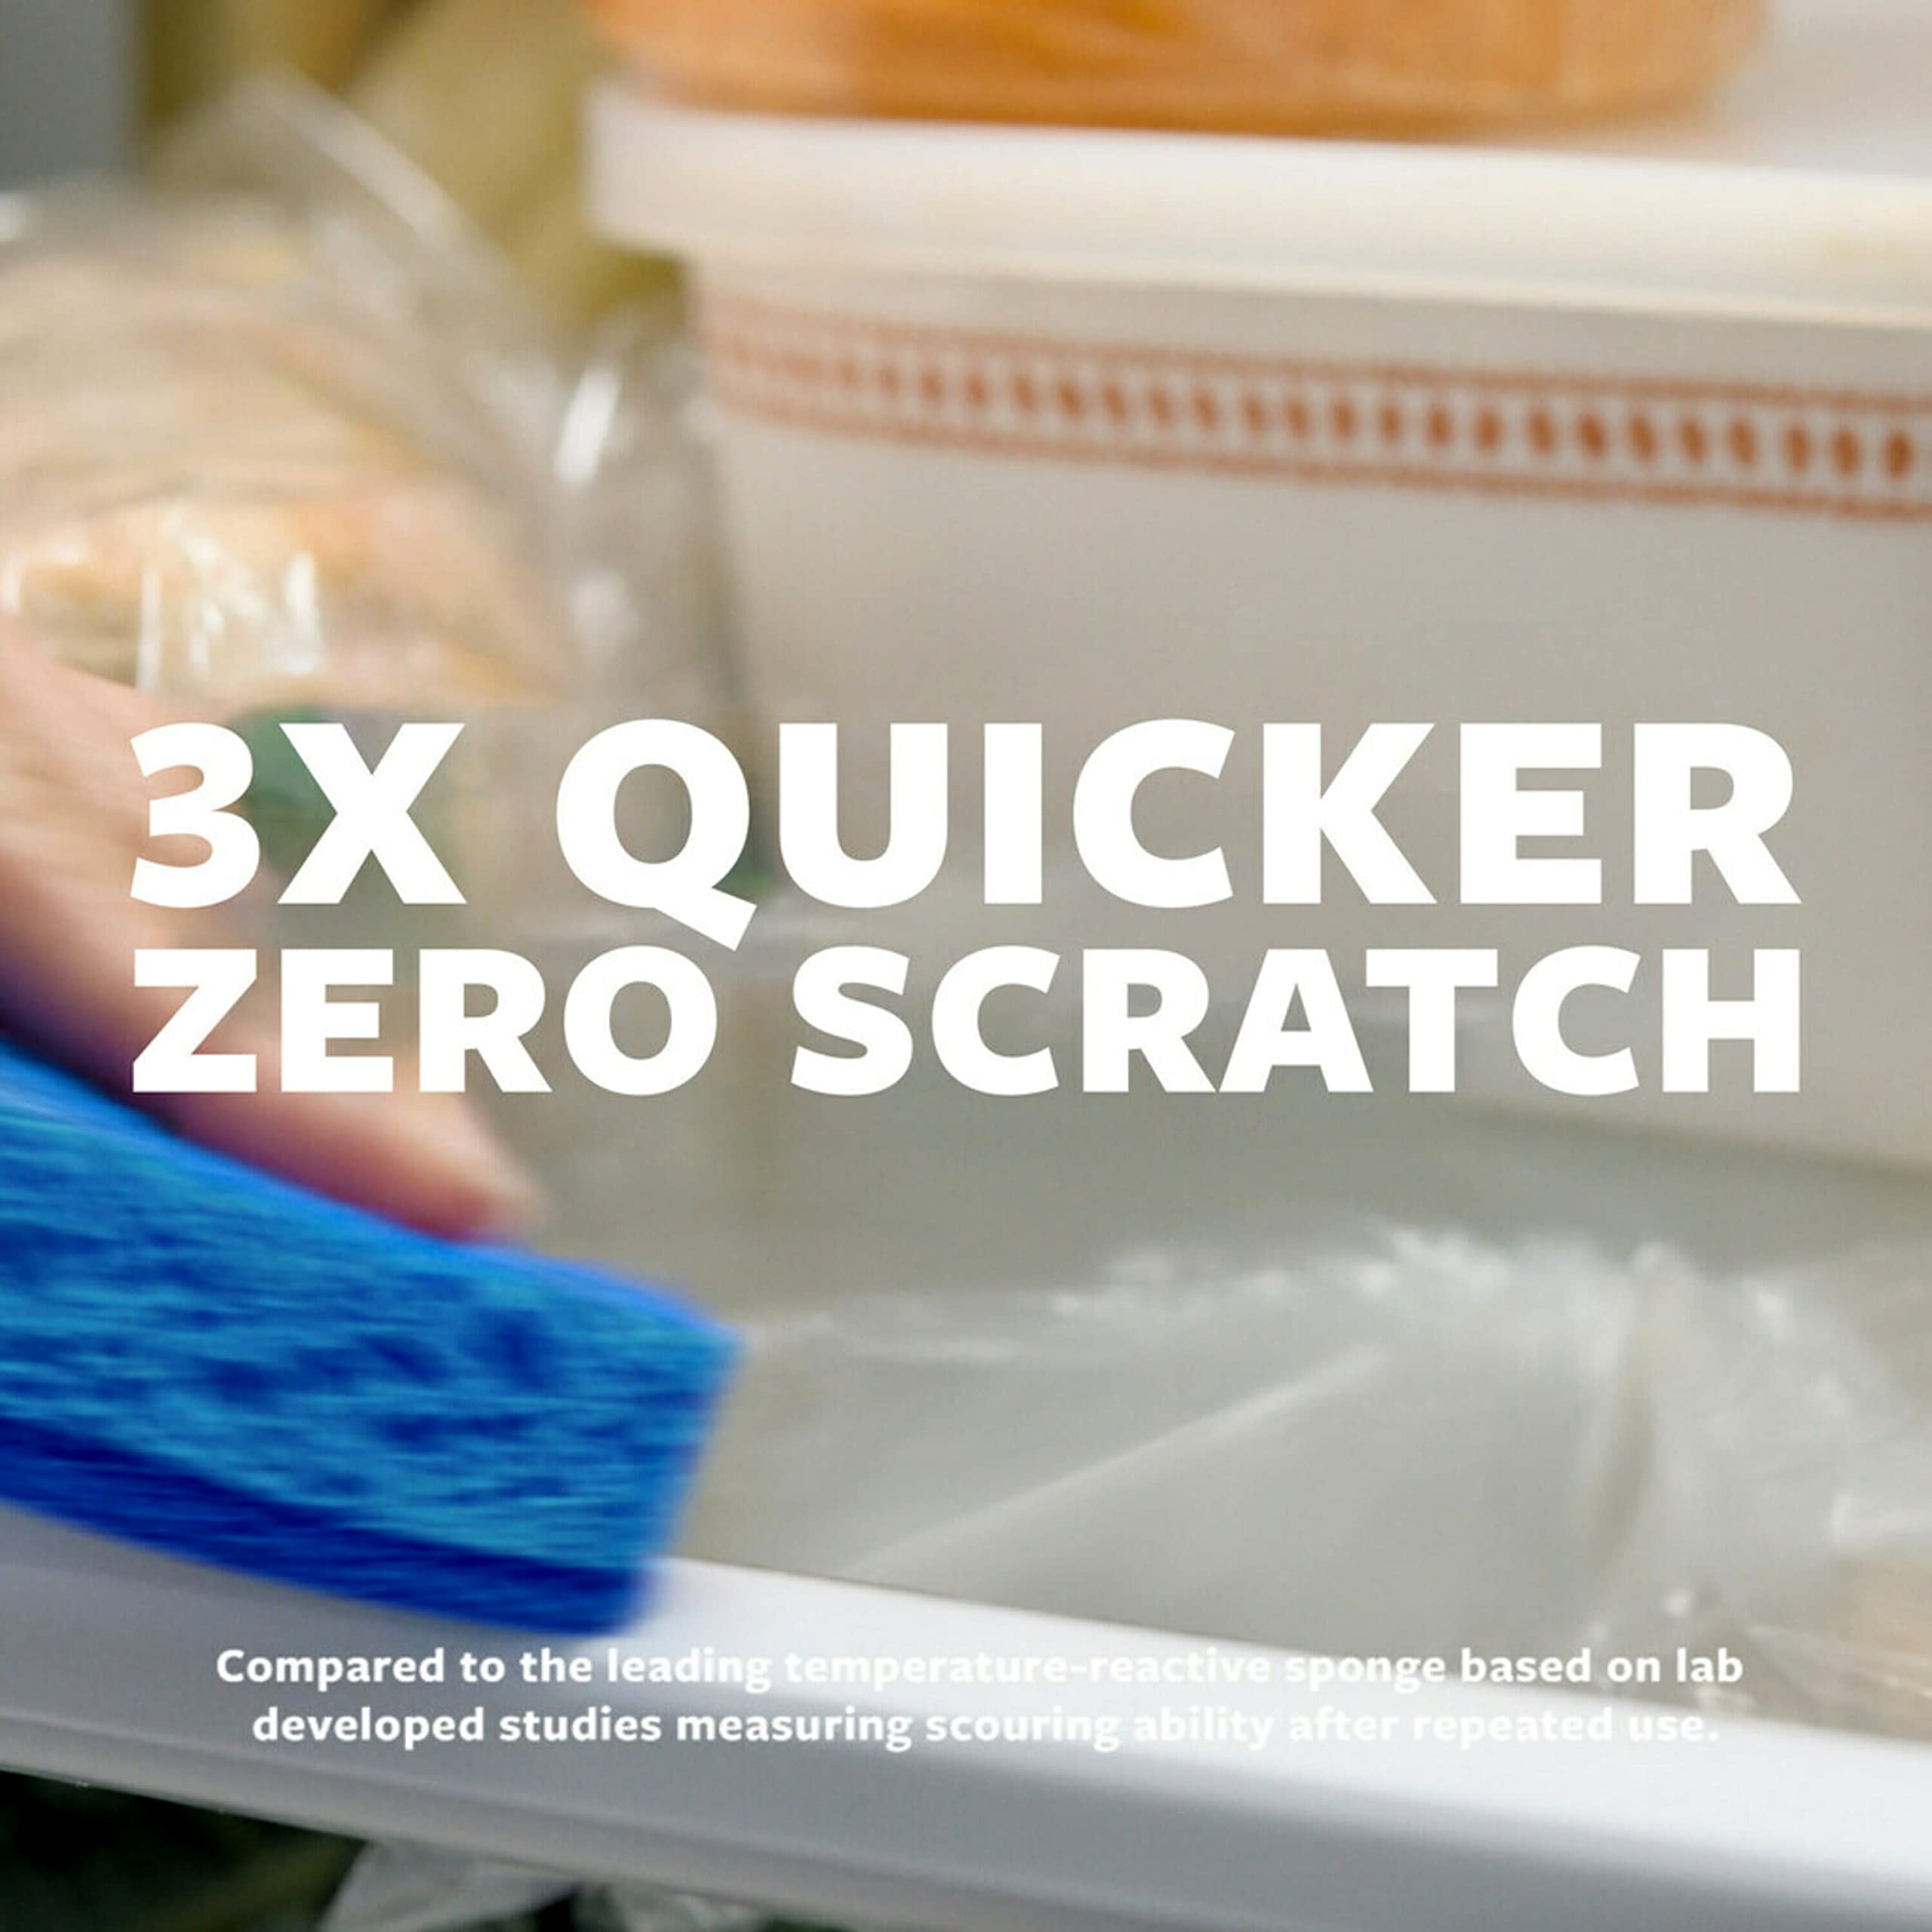 Scotch-Brite Zero Scratch Non-Scratch Scrub Sponges, Sponges for Cleaning Kitchen, Bathroom, and Household, non-scratch Sponges Safe for Non-Stick Cookware, 9 Scrubbing Sponges